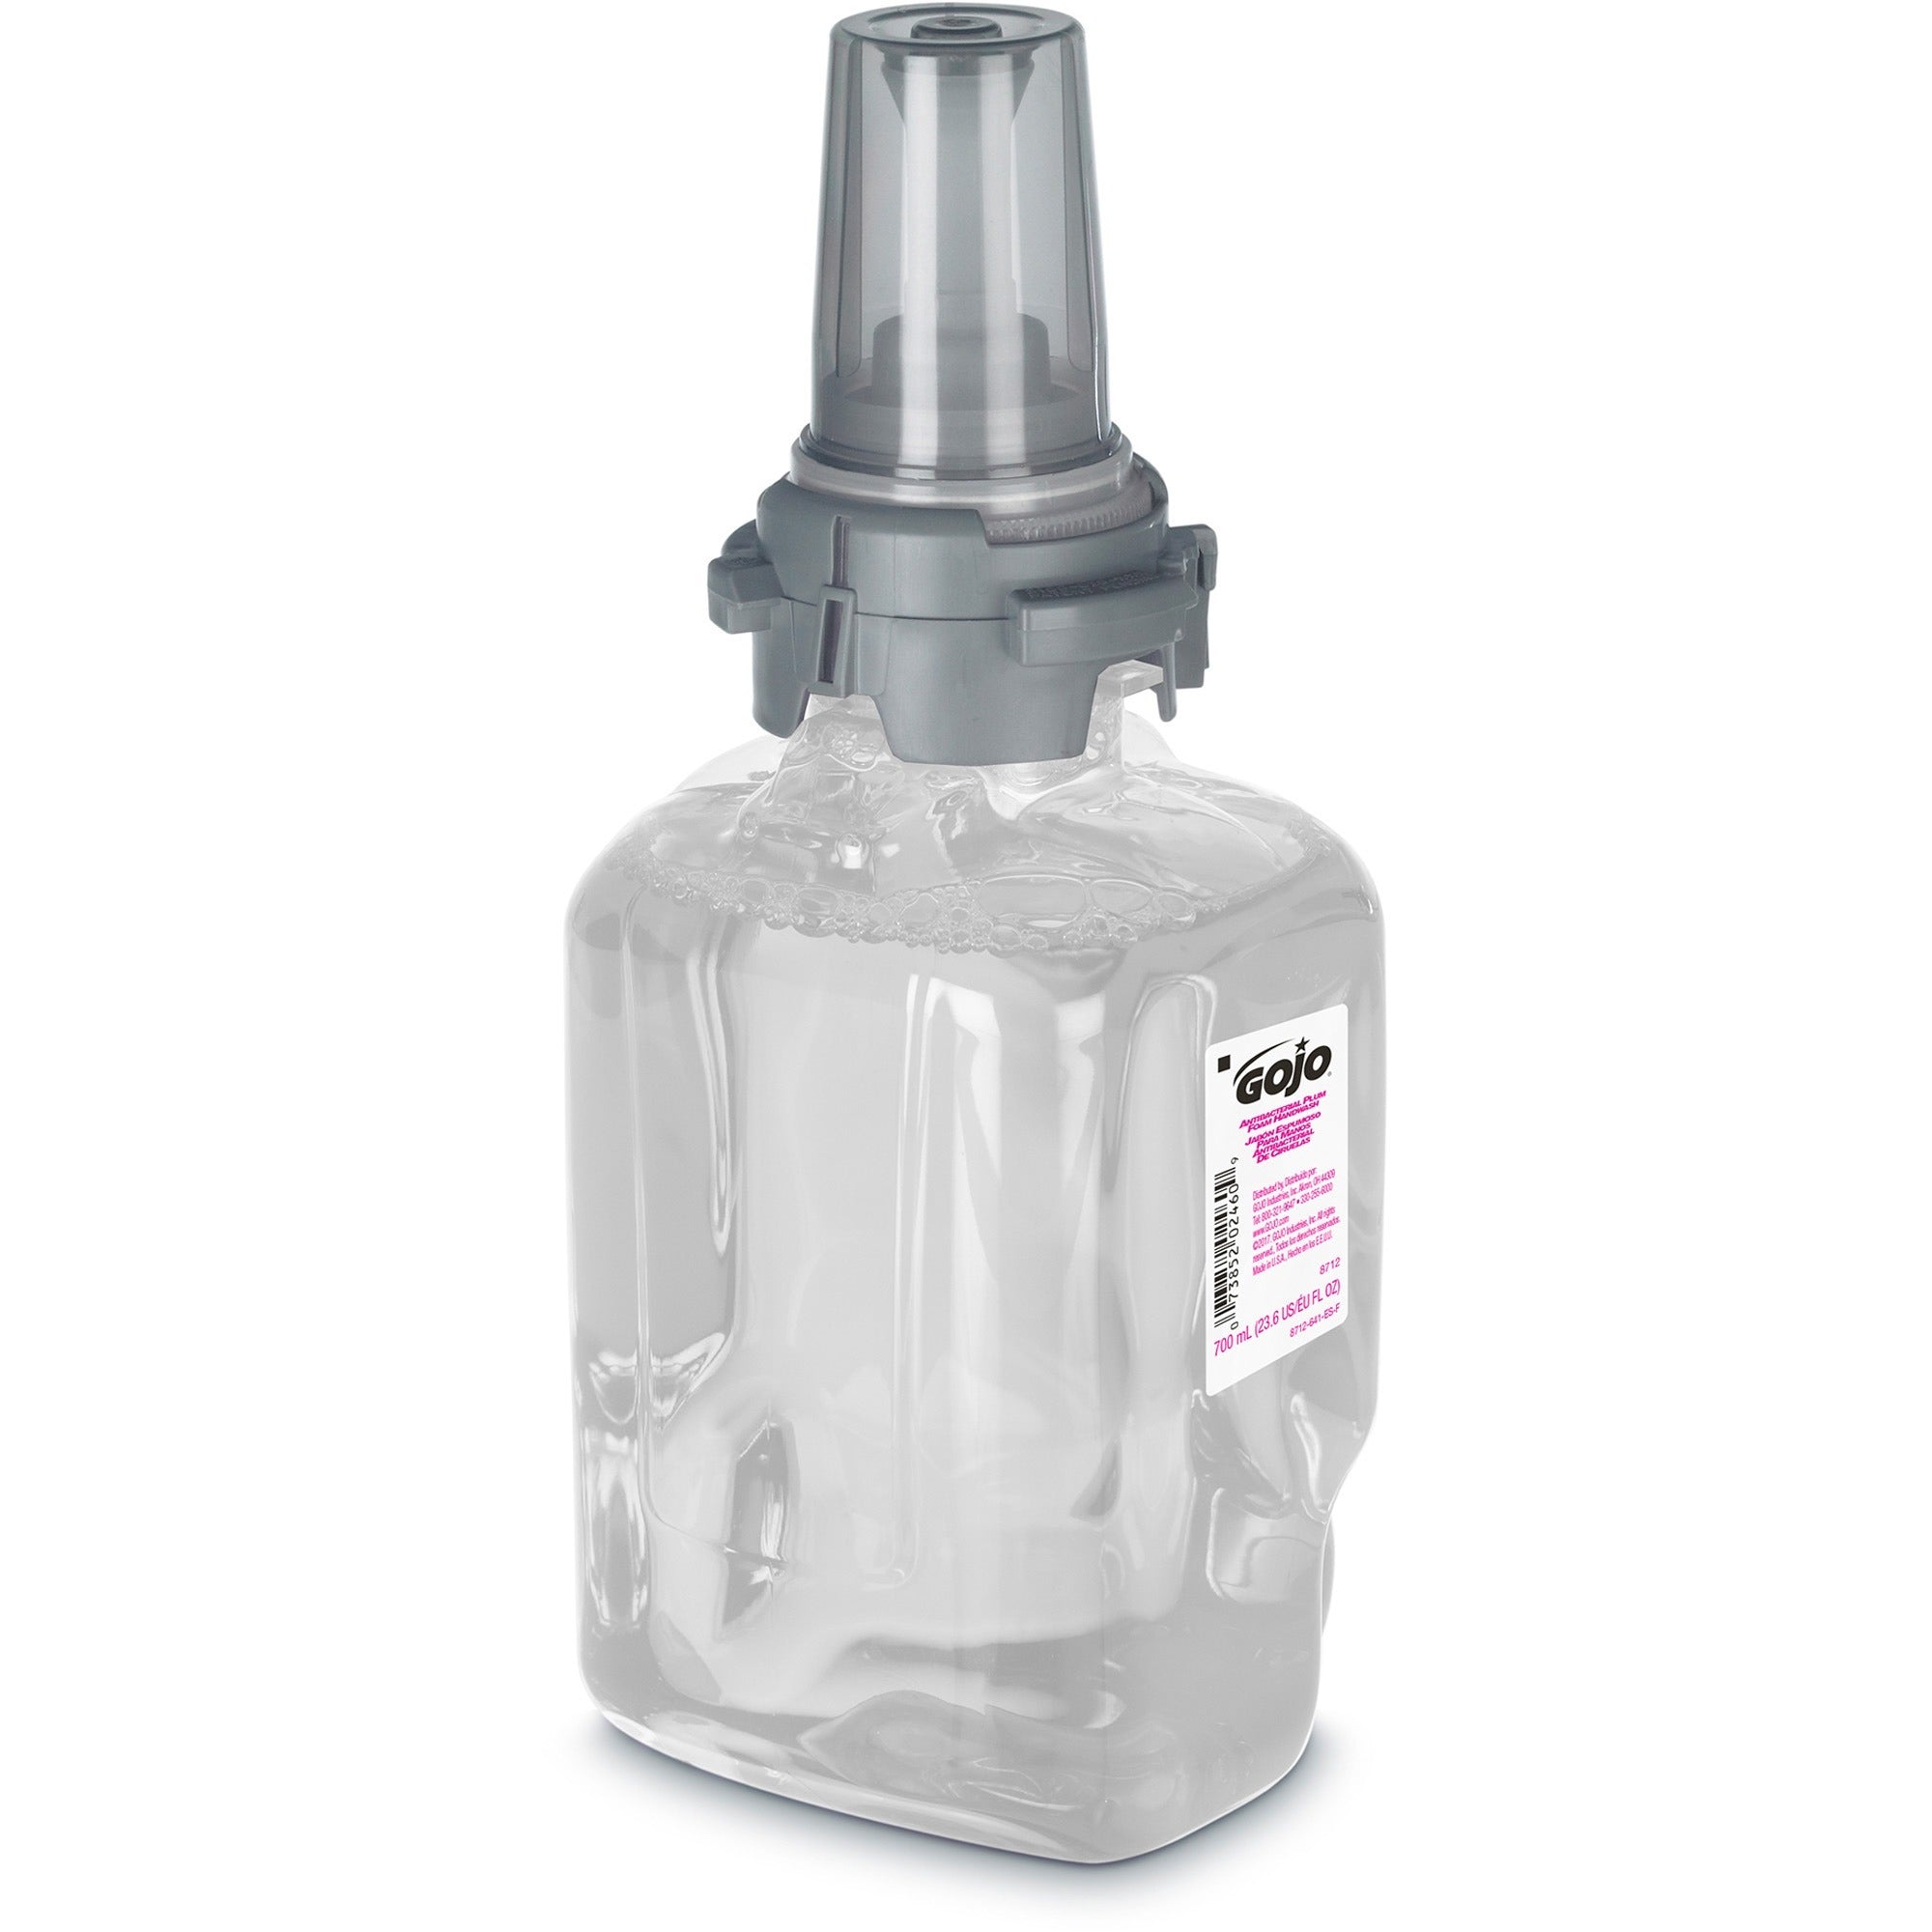 gojo-adx-7-dispenser-antibacterial-hand-soap-refill-plum-scentfor-237-fl-oz-700-ml-pump-bottle-dispenser-bacteria-remover-kill-germs-hand-skin-moisturizing-antibacterial-clear-rich-lather-bio-based-4-carton_goj871204ct - 2